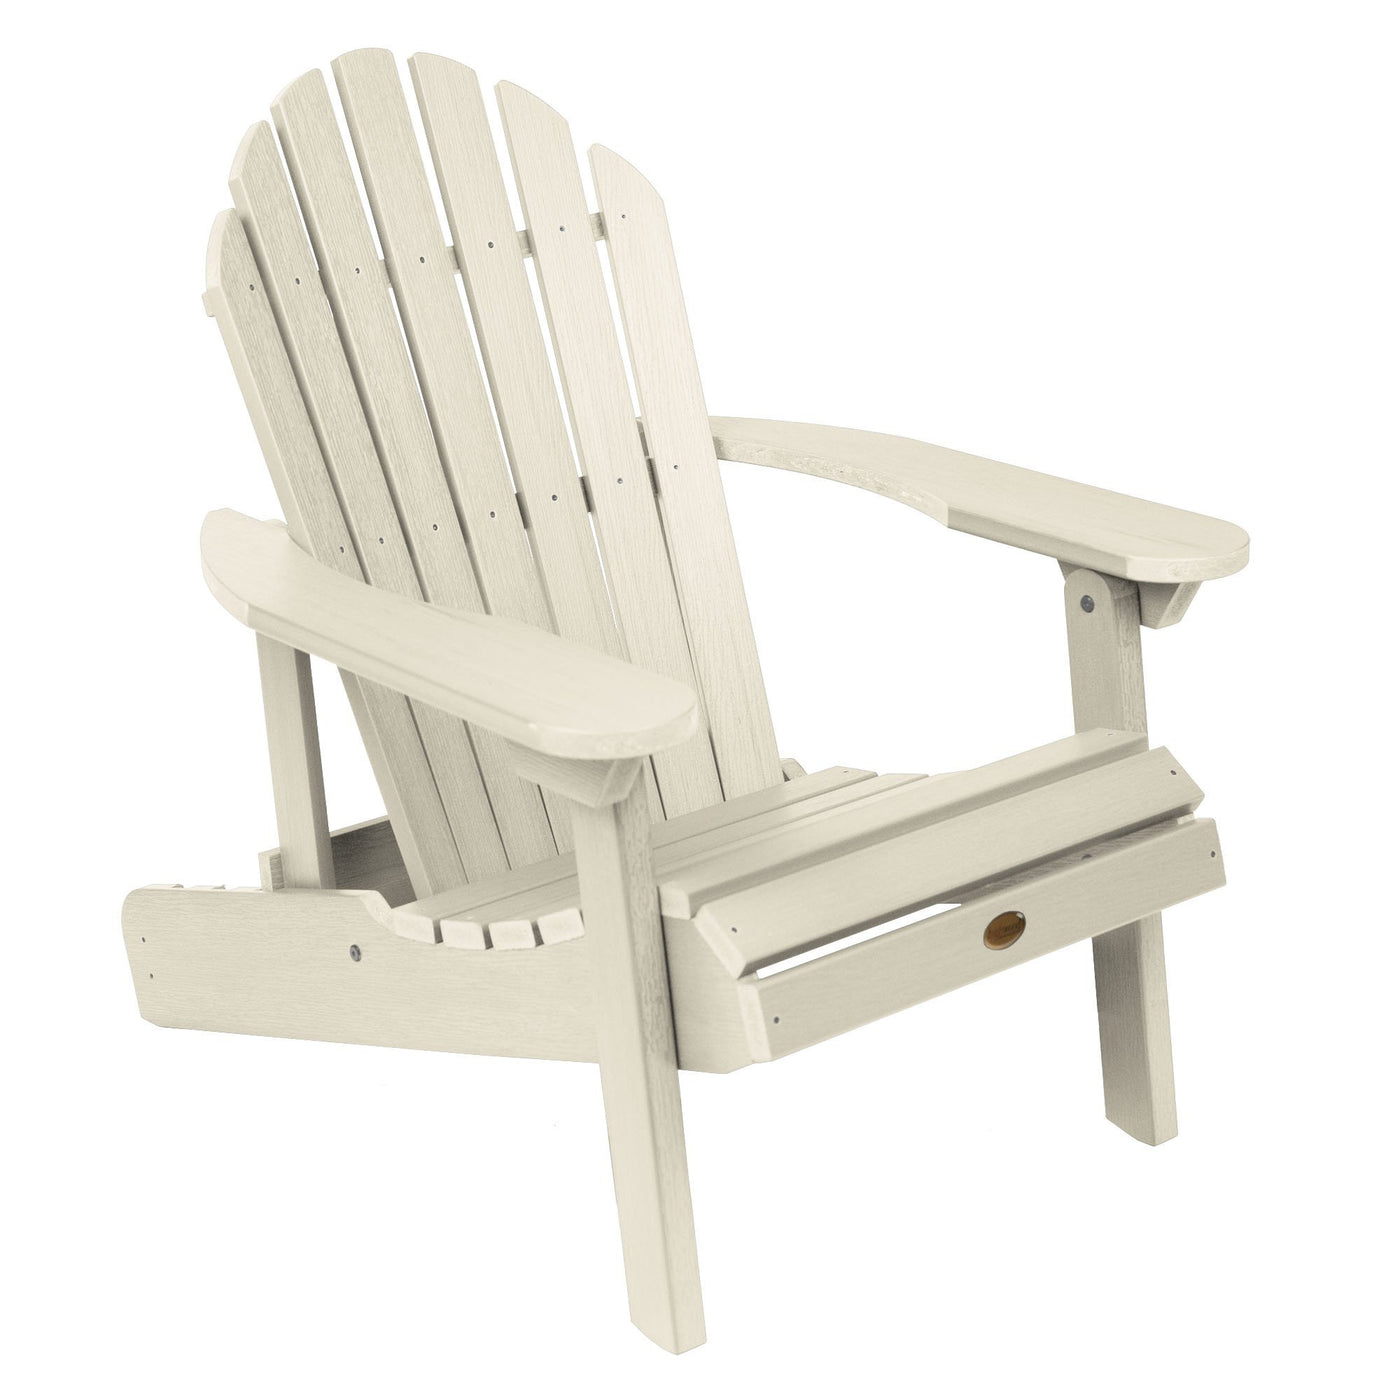 Hamilton Adirondack chair in Whitewash